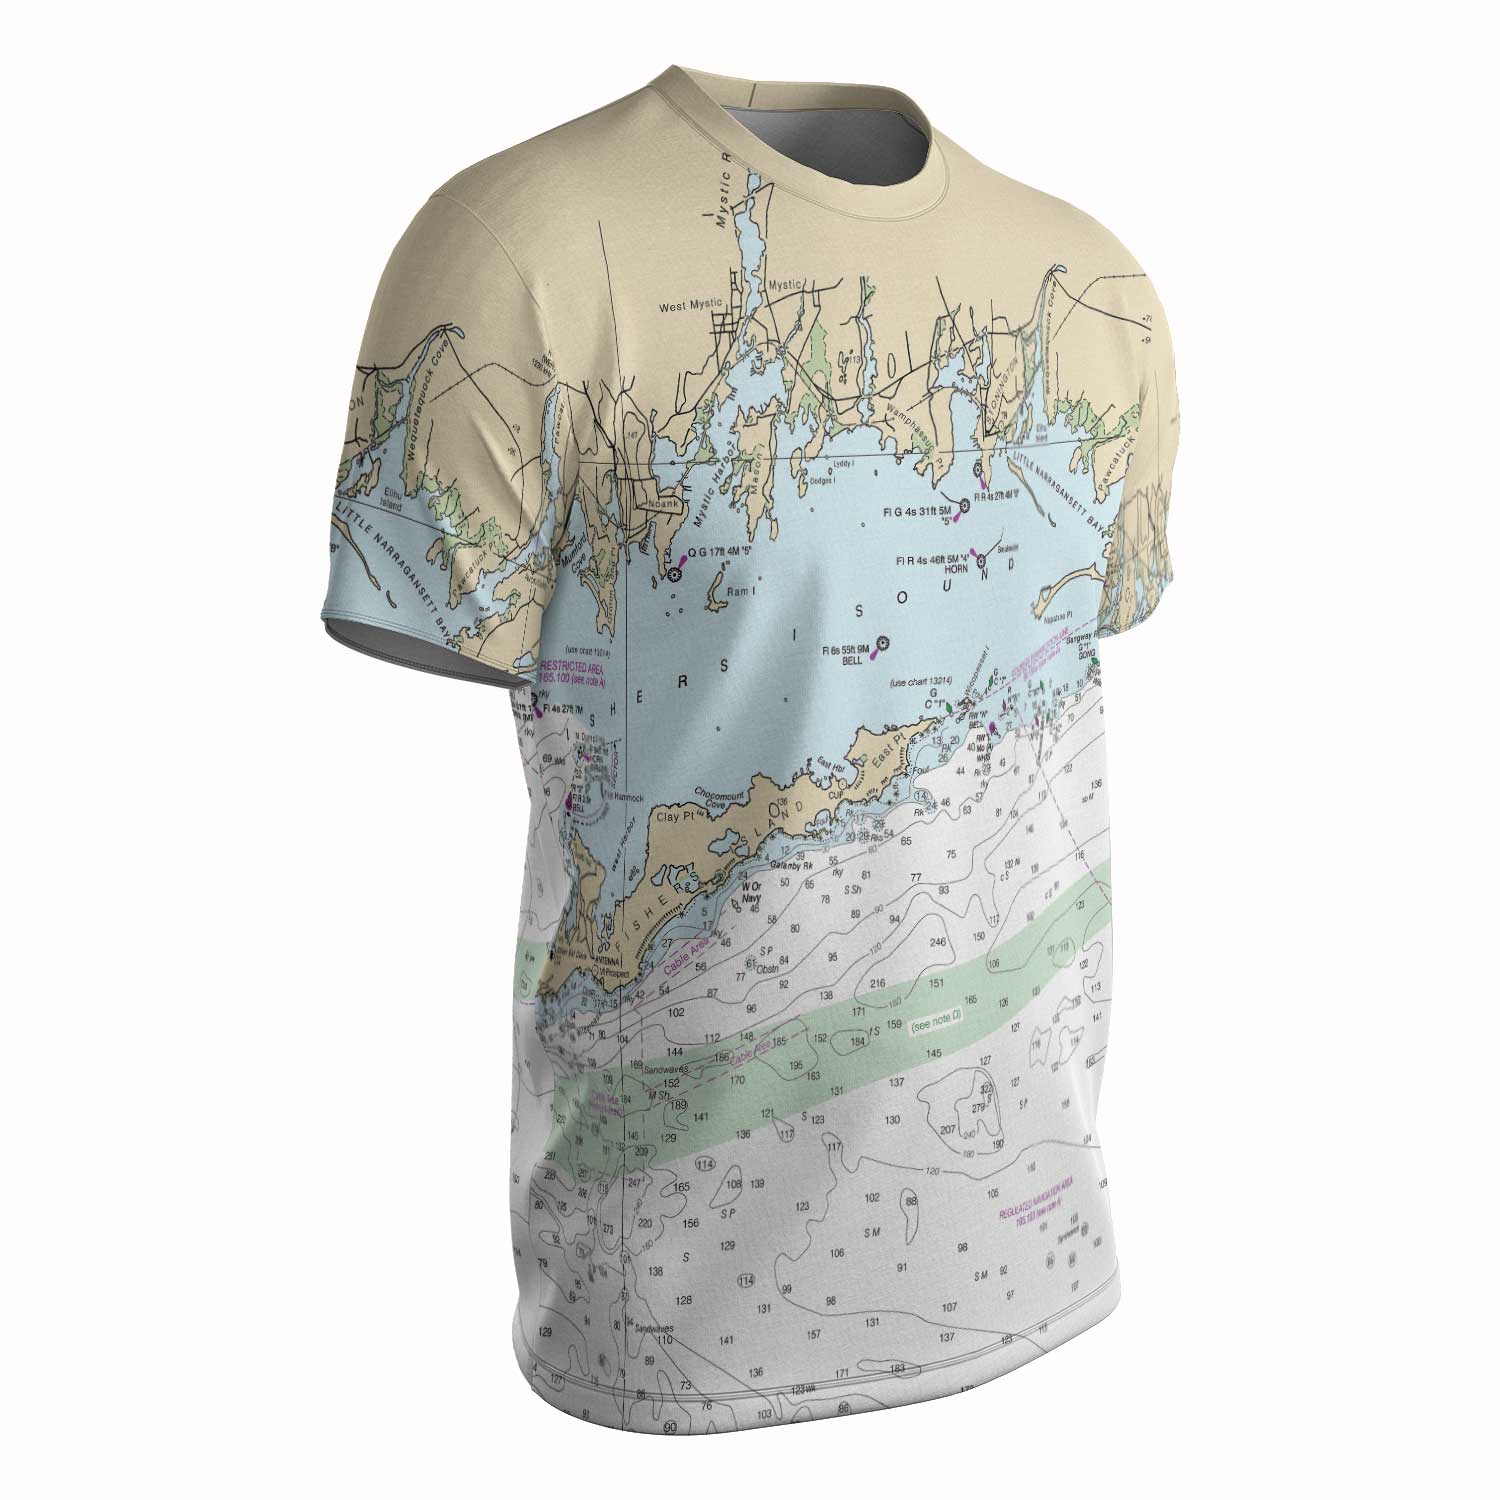 The Fishers Island Sound T Shirt